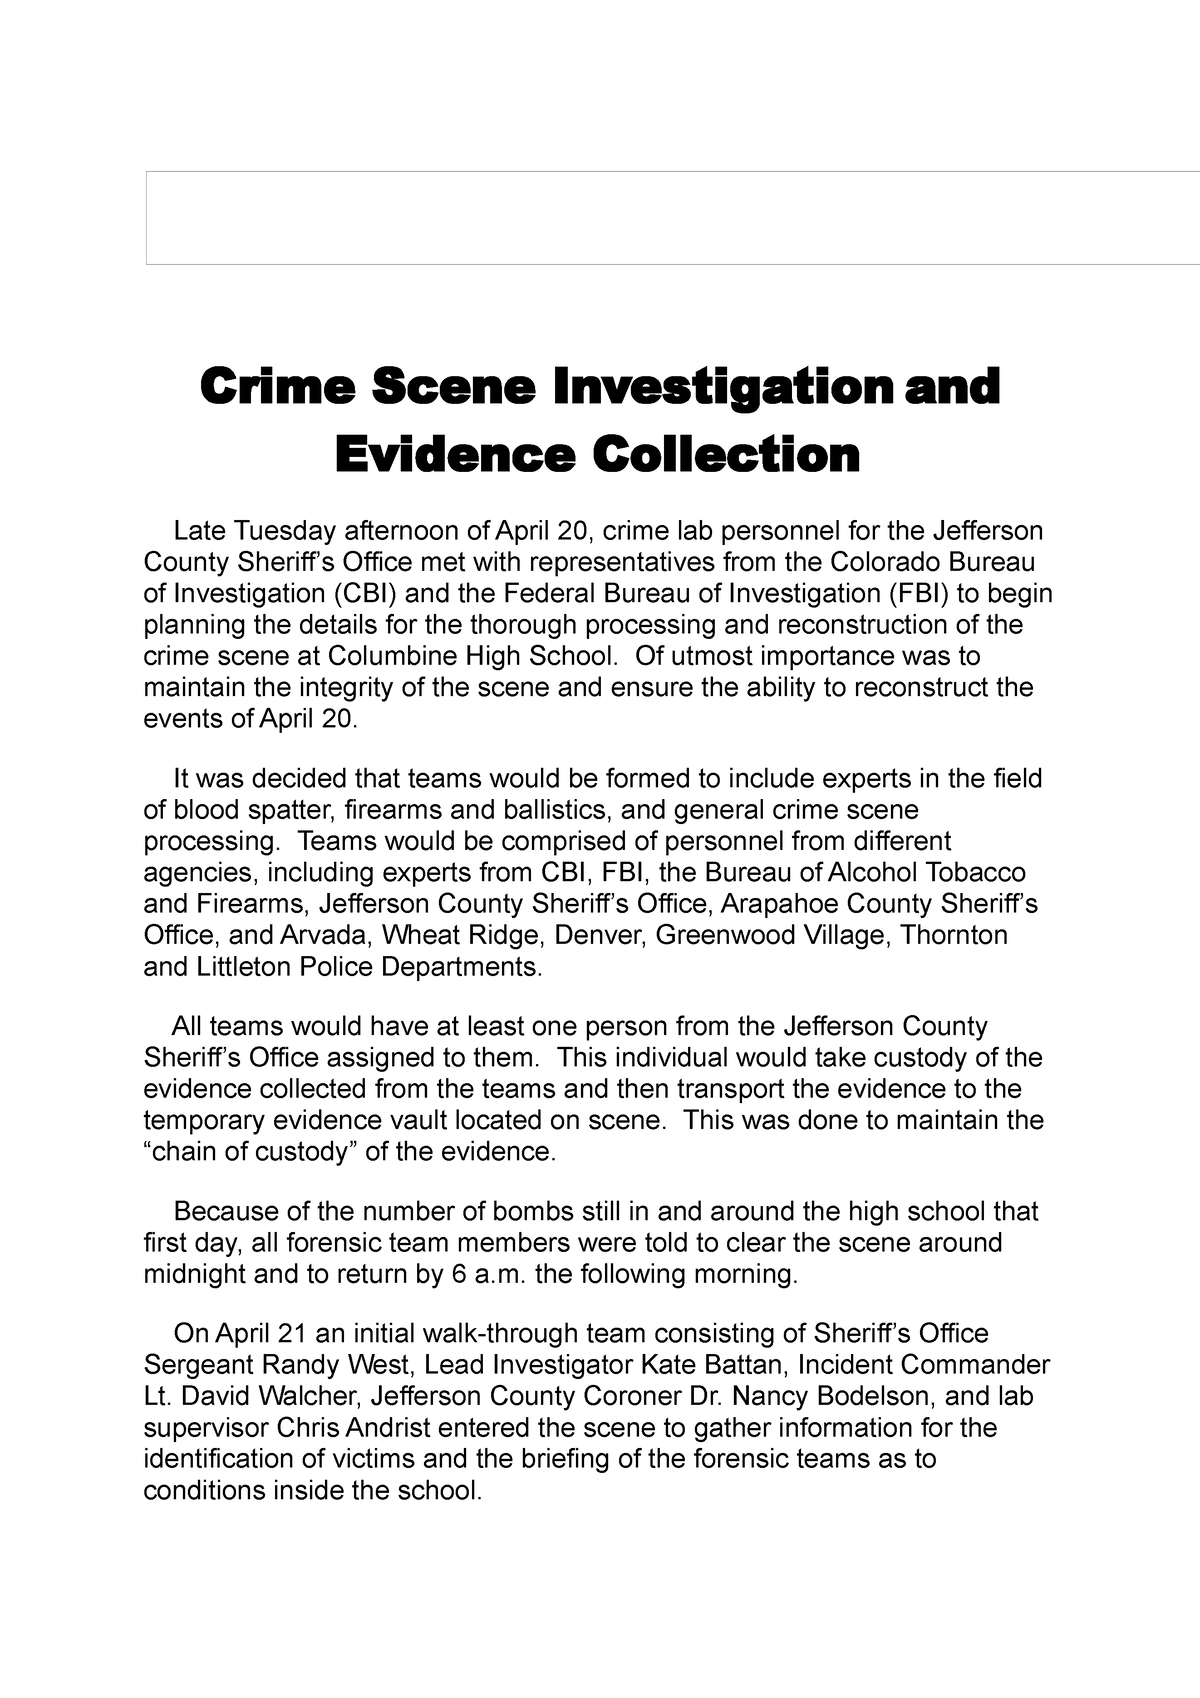 research paper topics criminal investigation